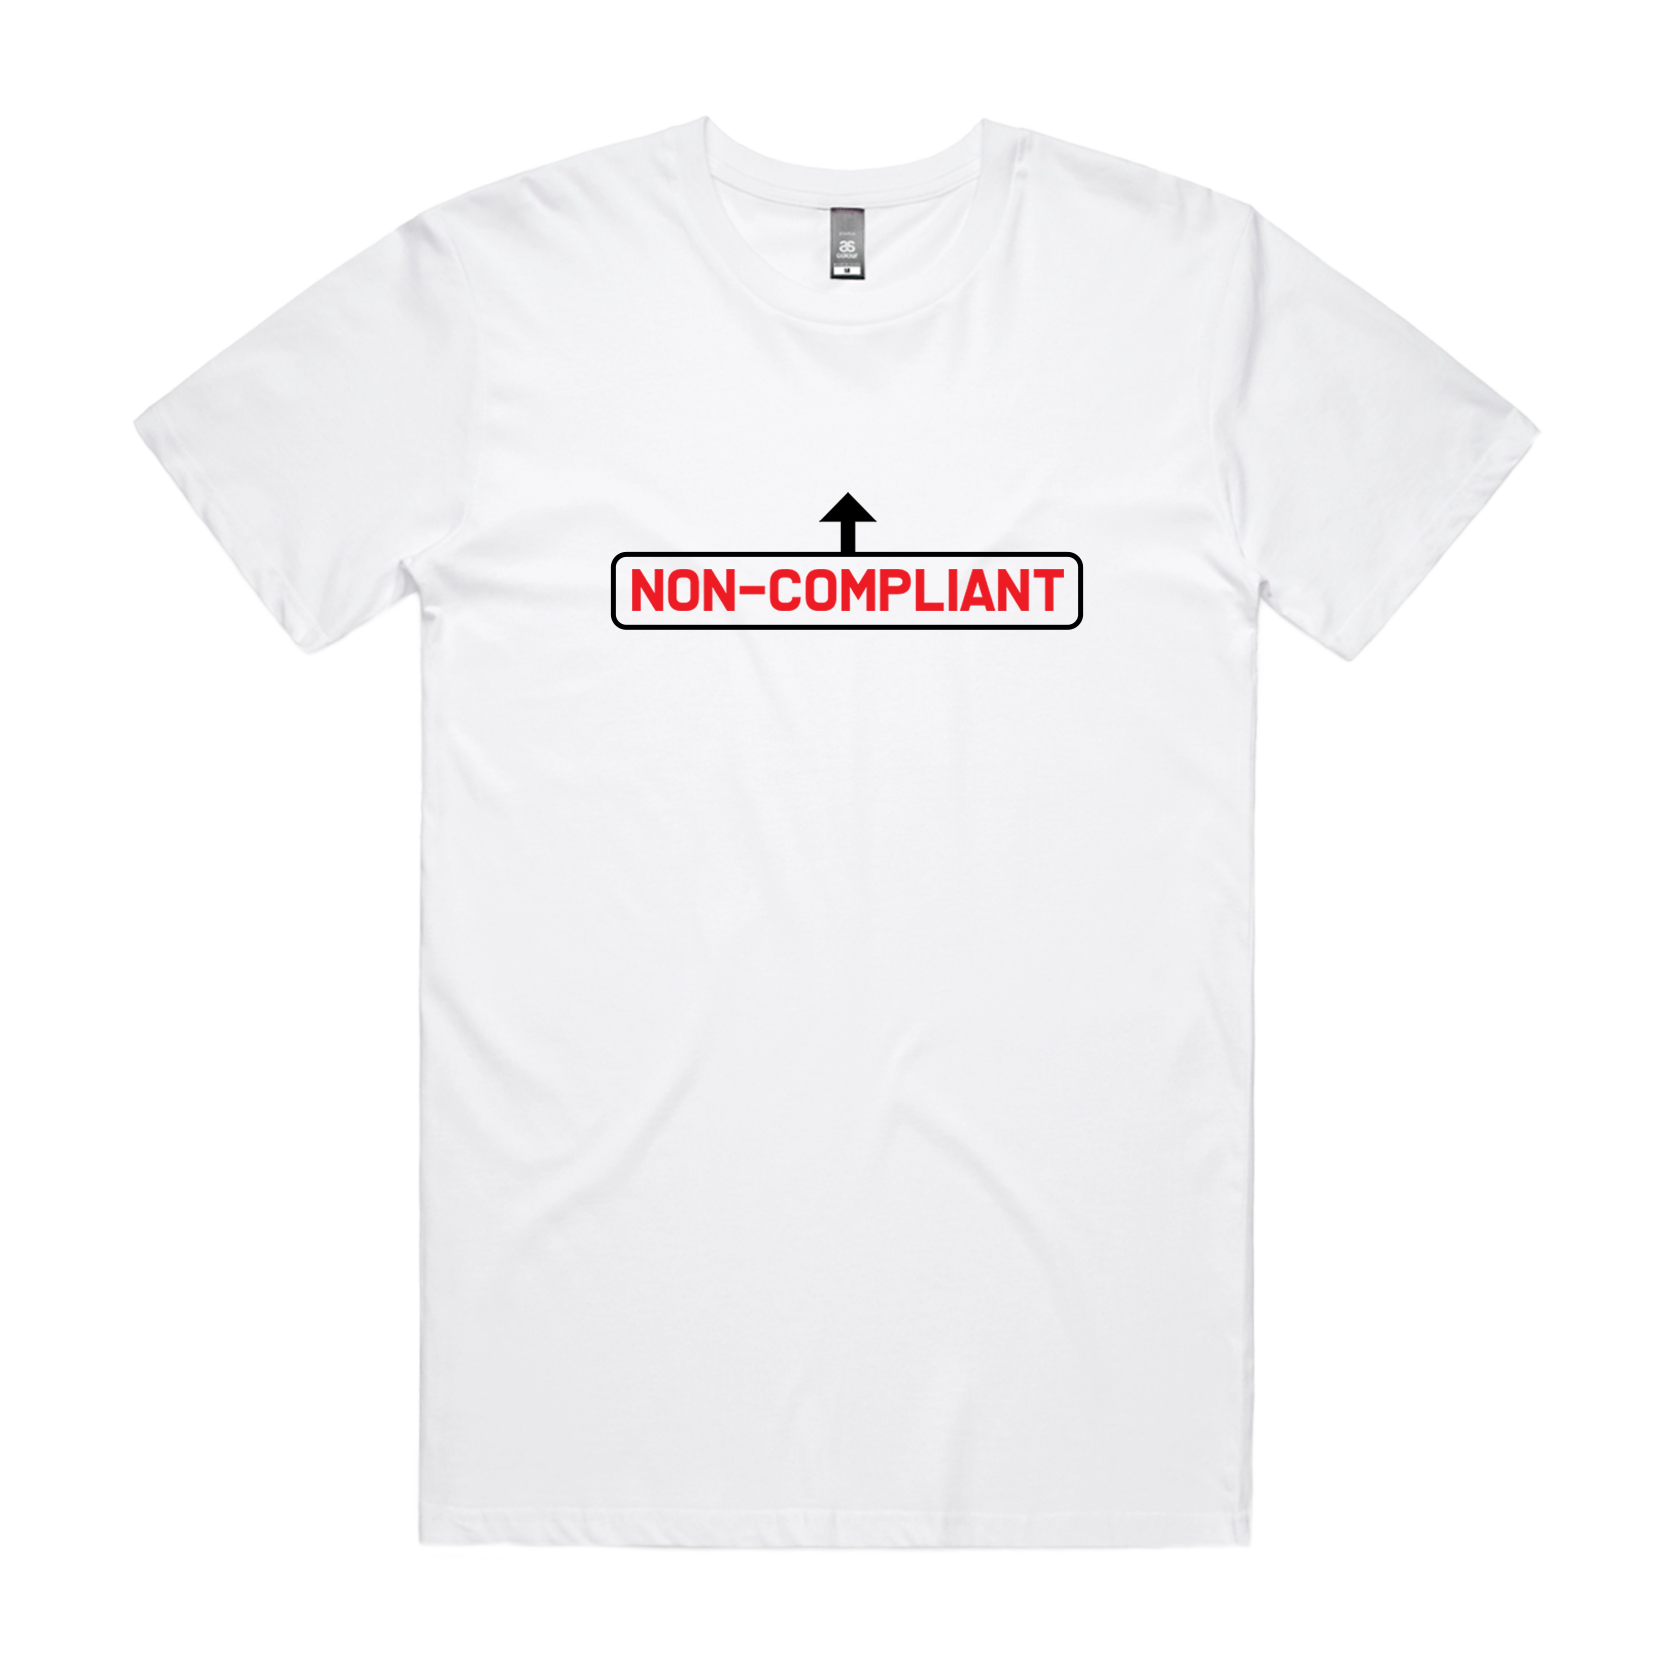 NON-COMPLIANT T-Shirt - Site Inspections